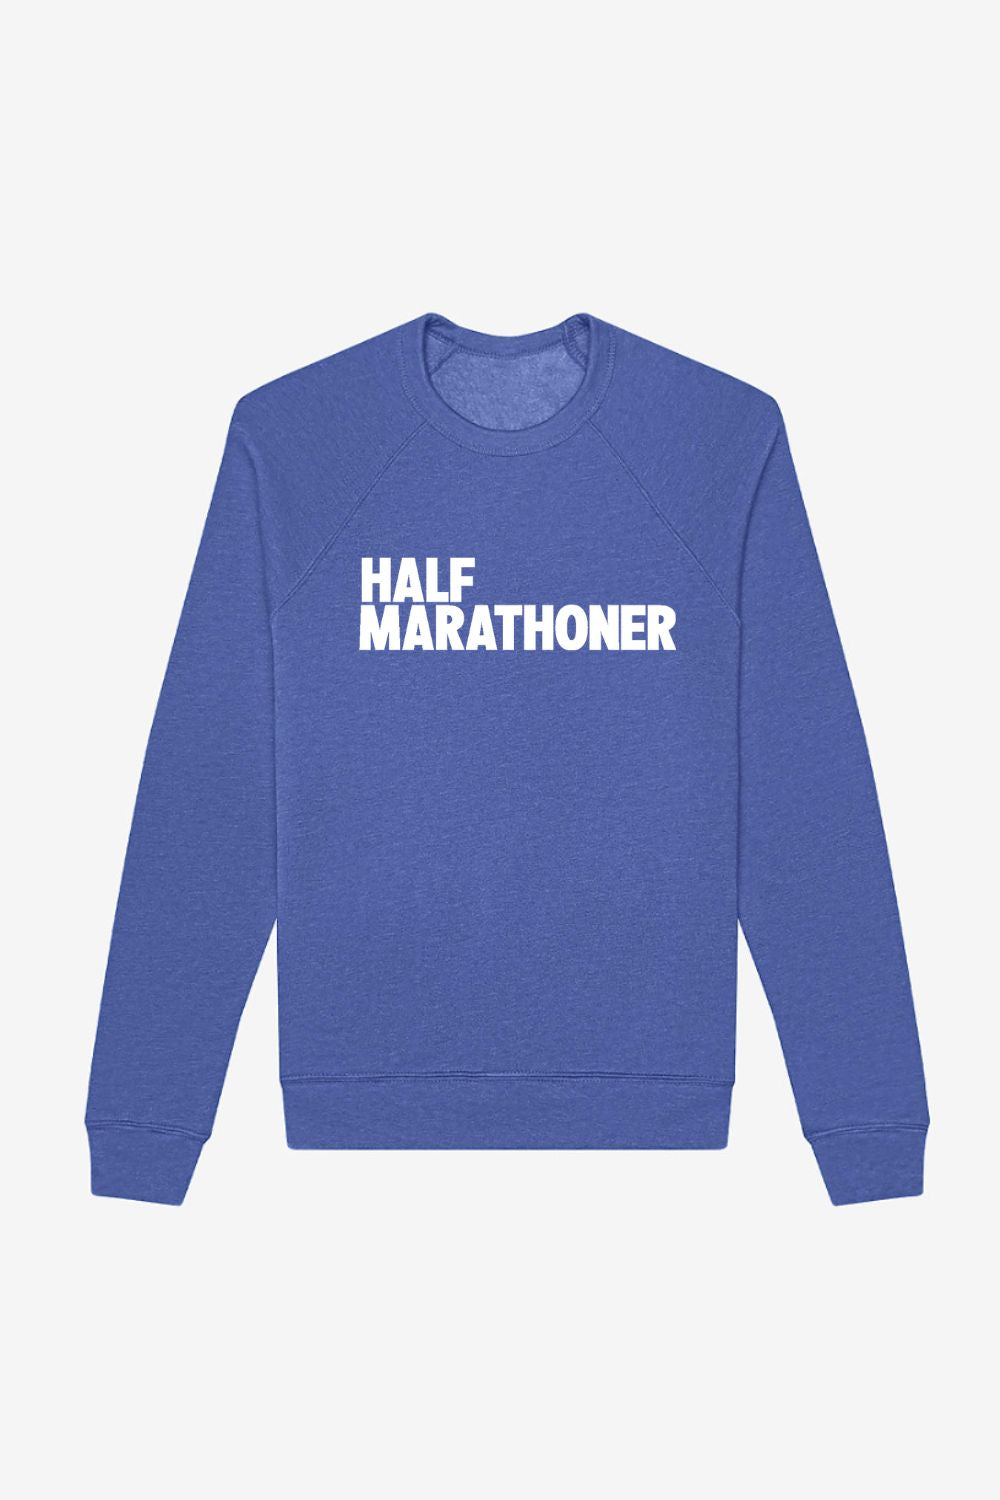 HALF MARATHONER Sweatshirt